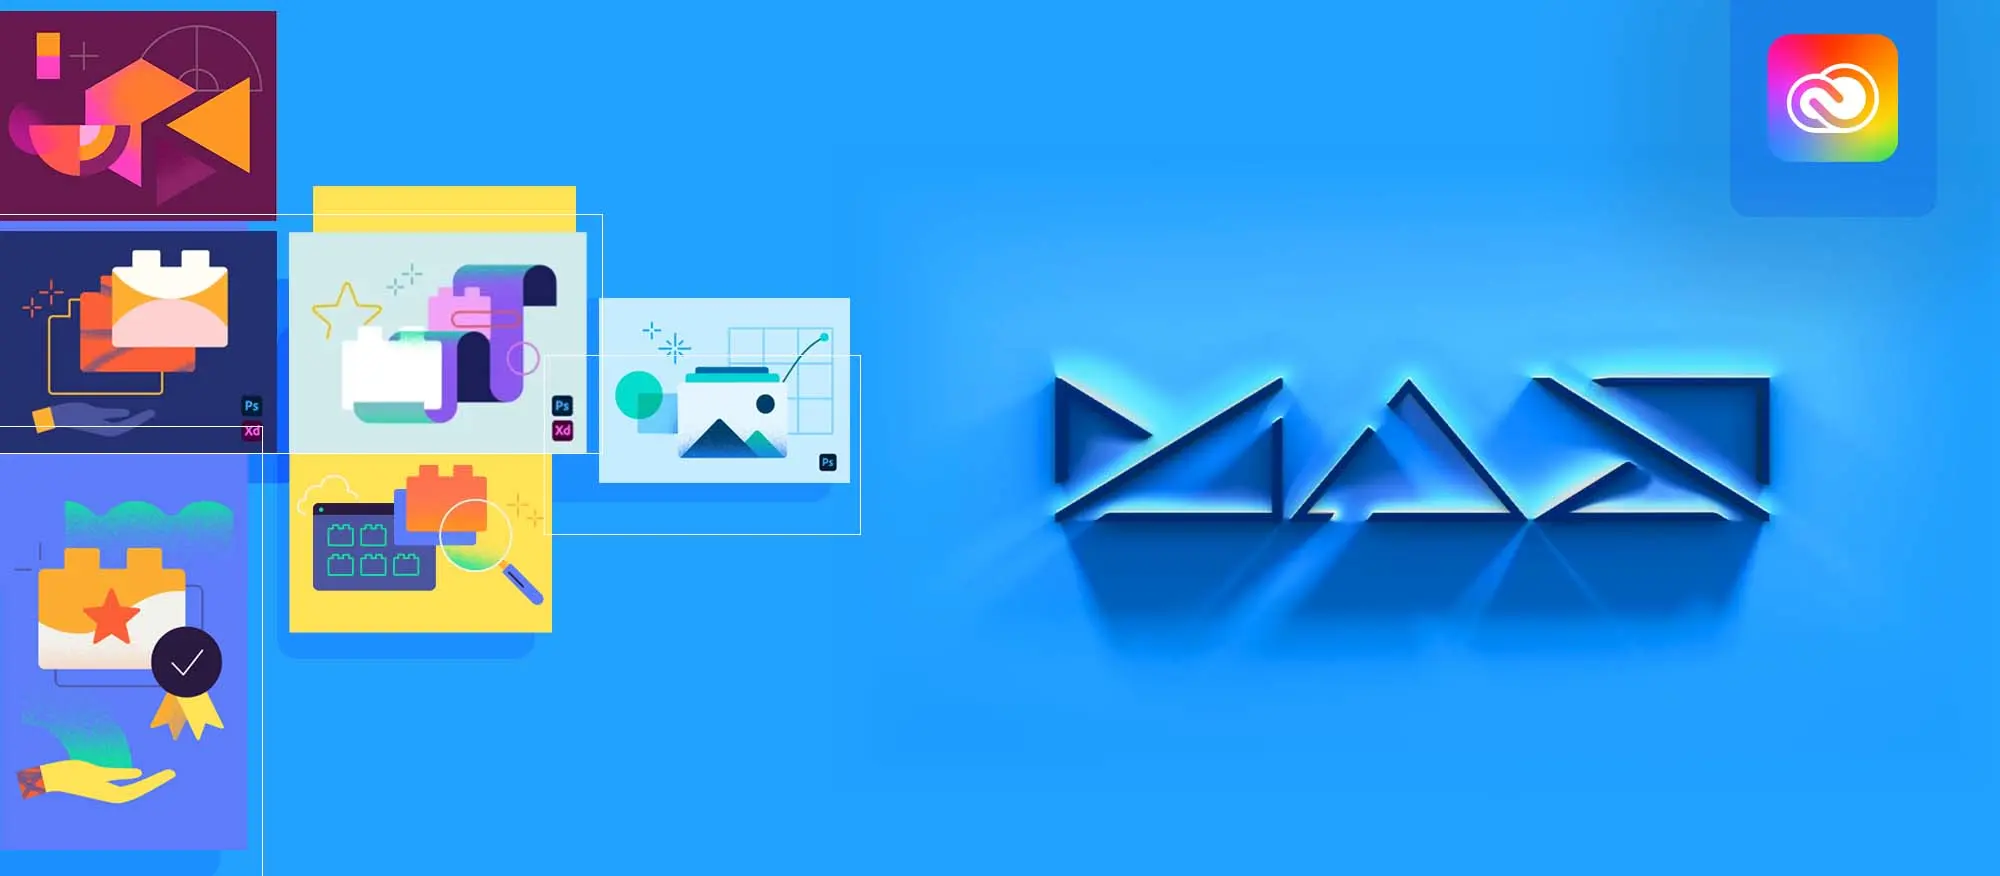 Adobe MAX 2021 logo and illustration